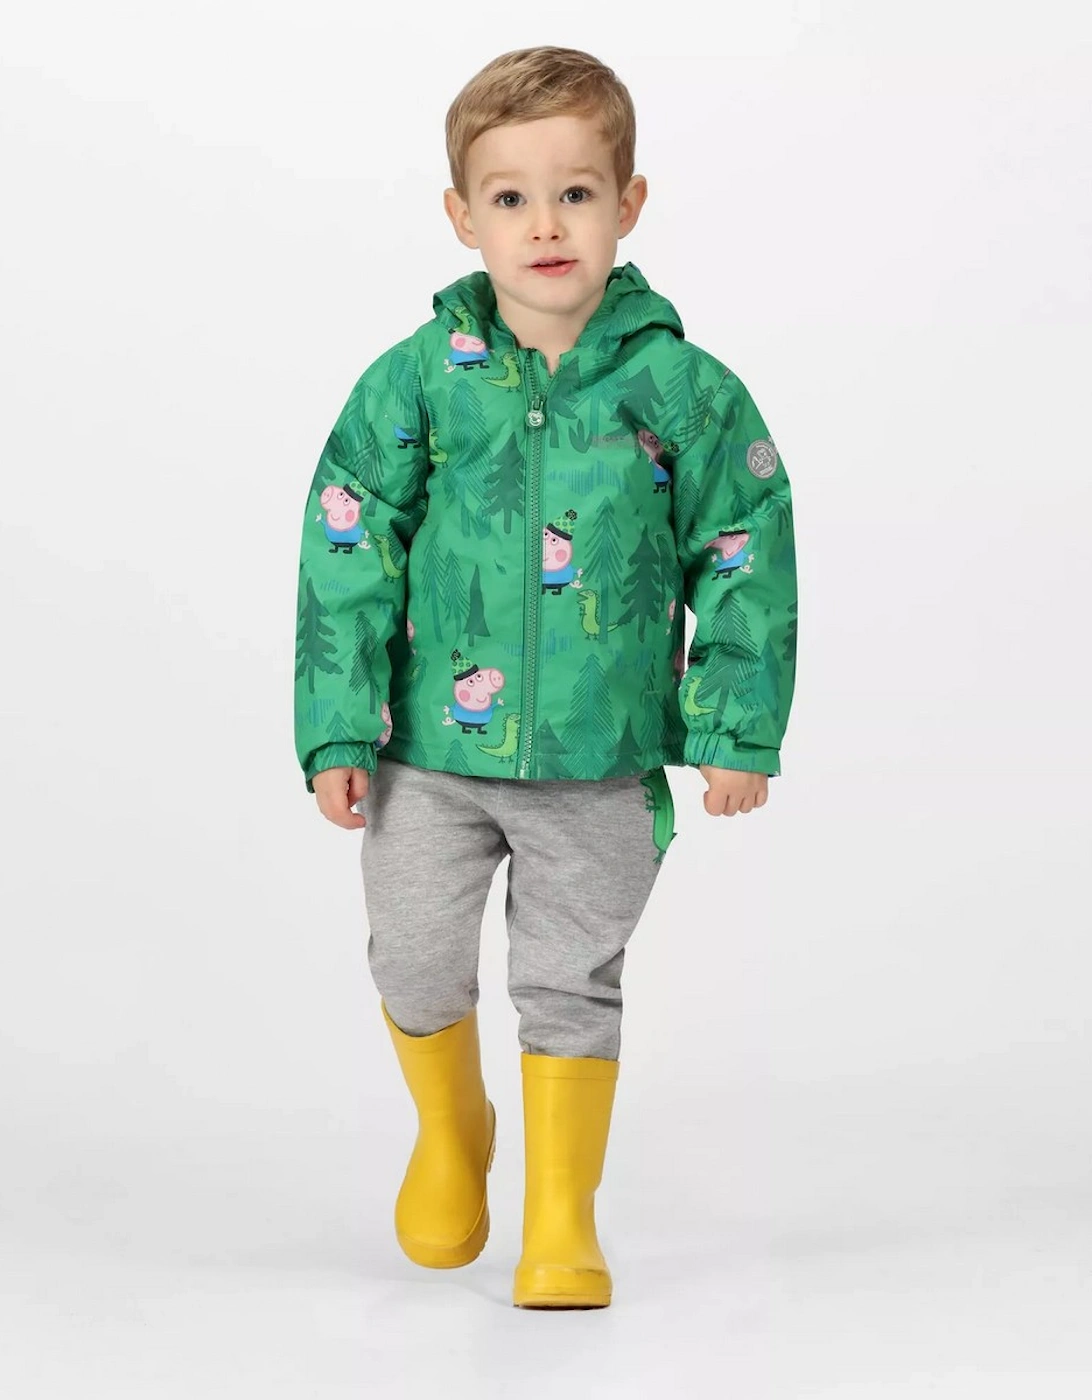 Childrens/Kids Muddy Puddle Dinosaur Peppa Pig Waterproof Jacket